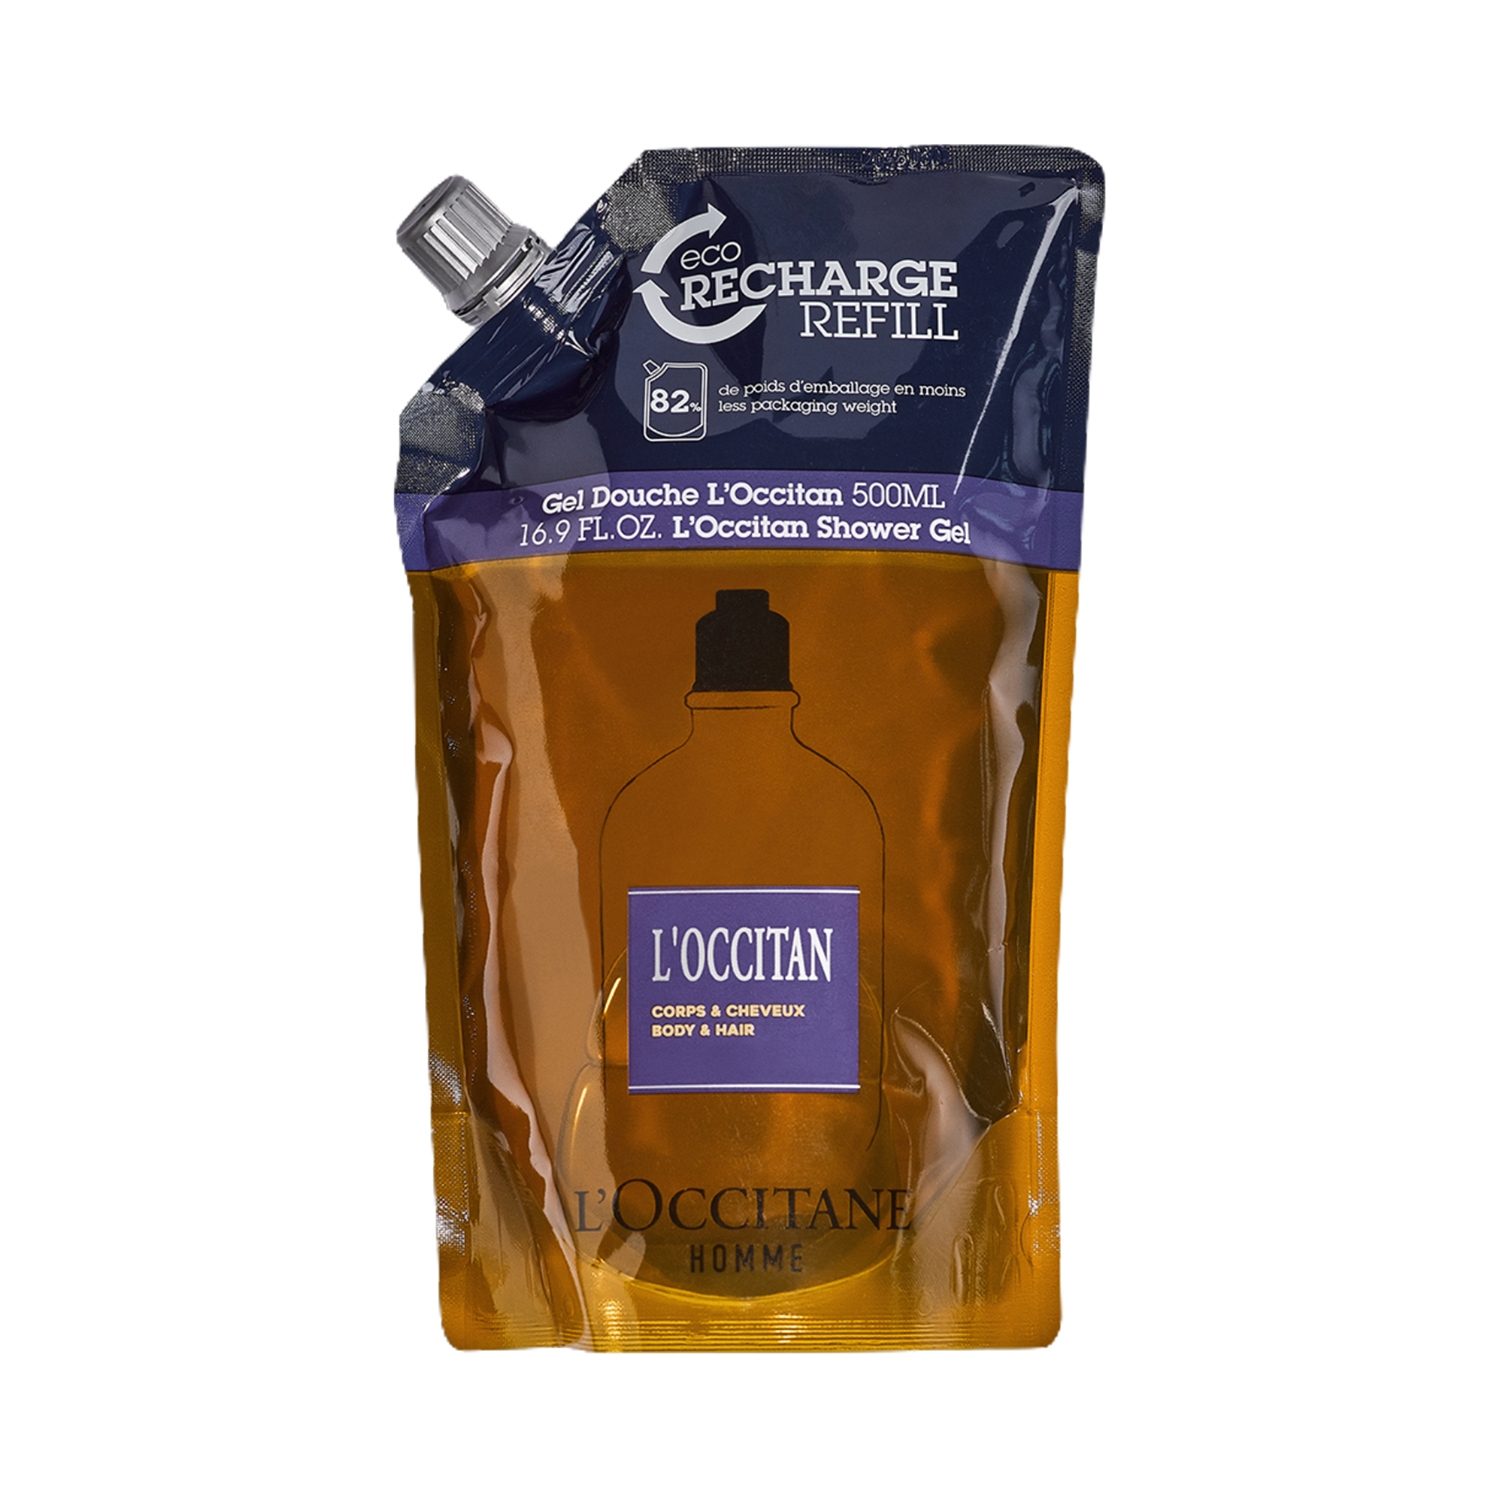 L'occitane | L'occitane Shower Gel Refill (500ml)